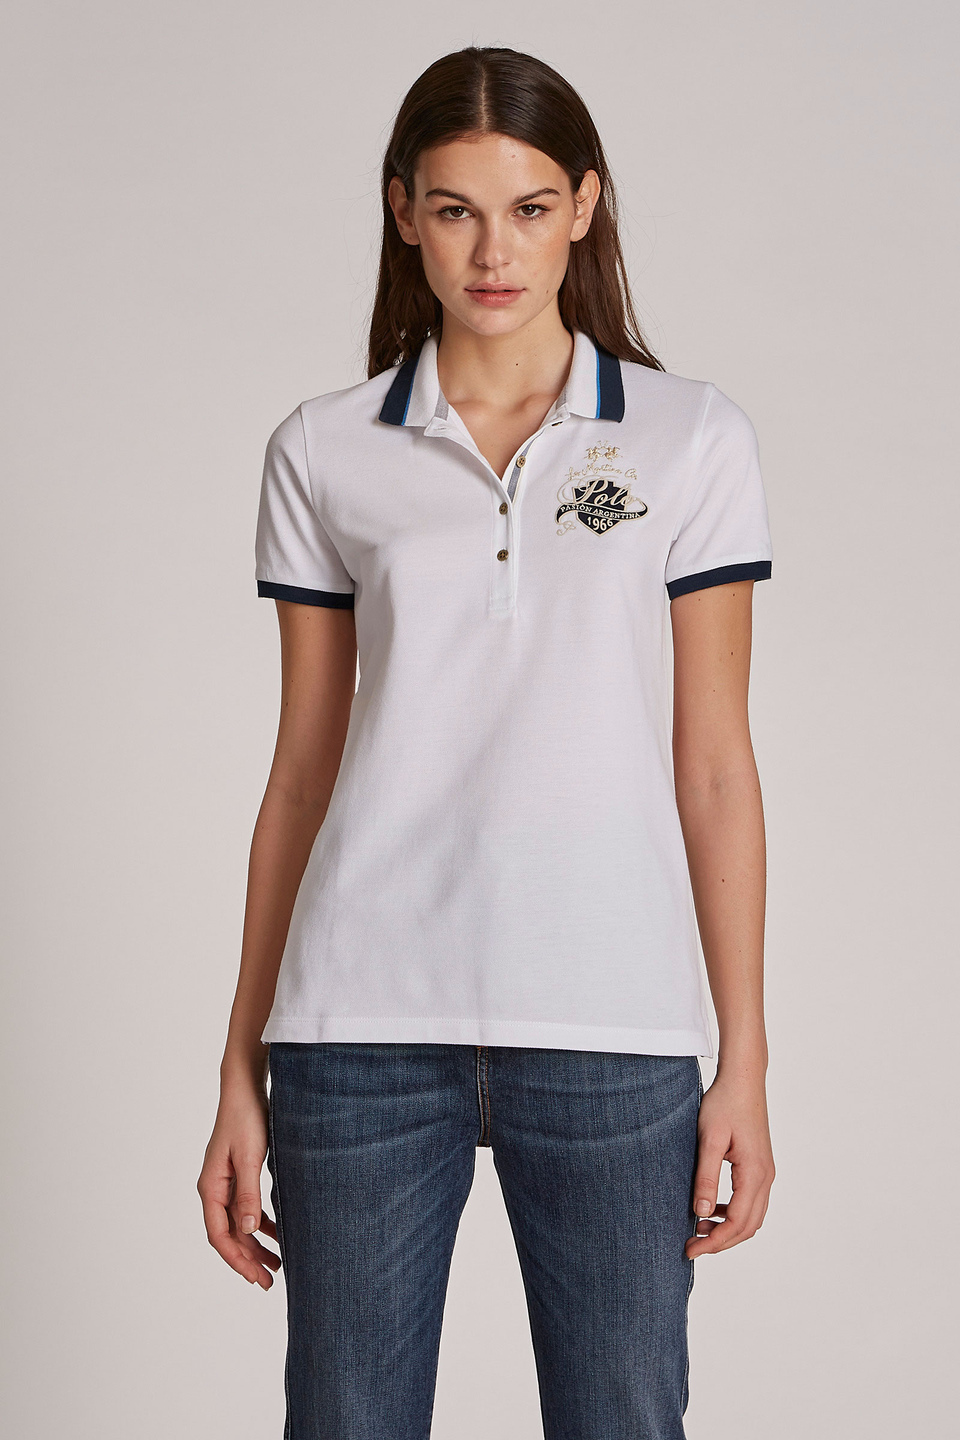 Damen-Poloshirt mit kurzem Arm aus 100 % Baumwolle im Regular Fit - La Martina - Official Online Shop